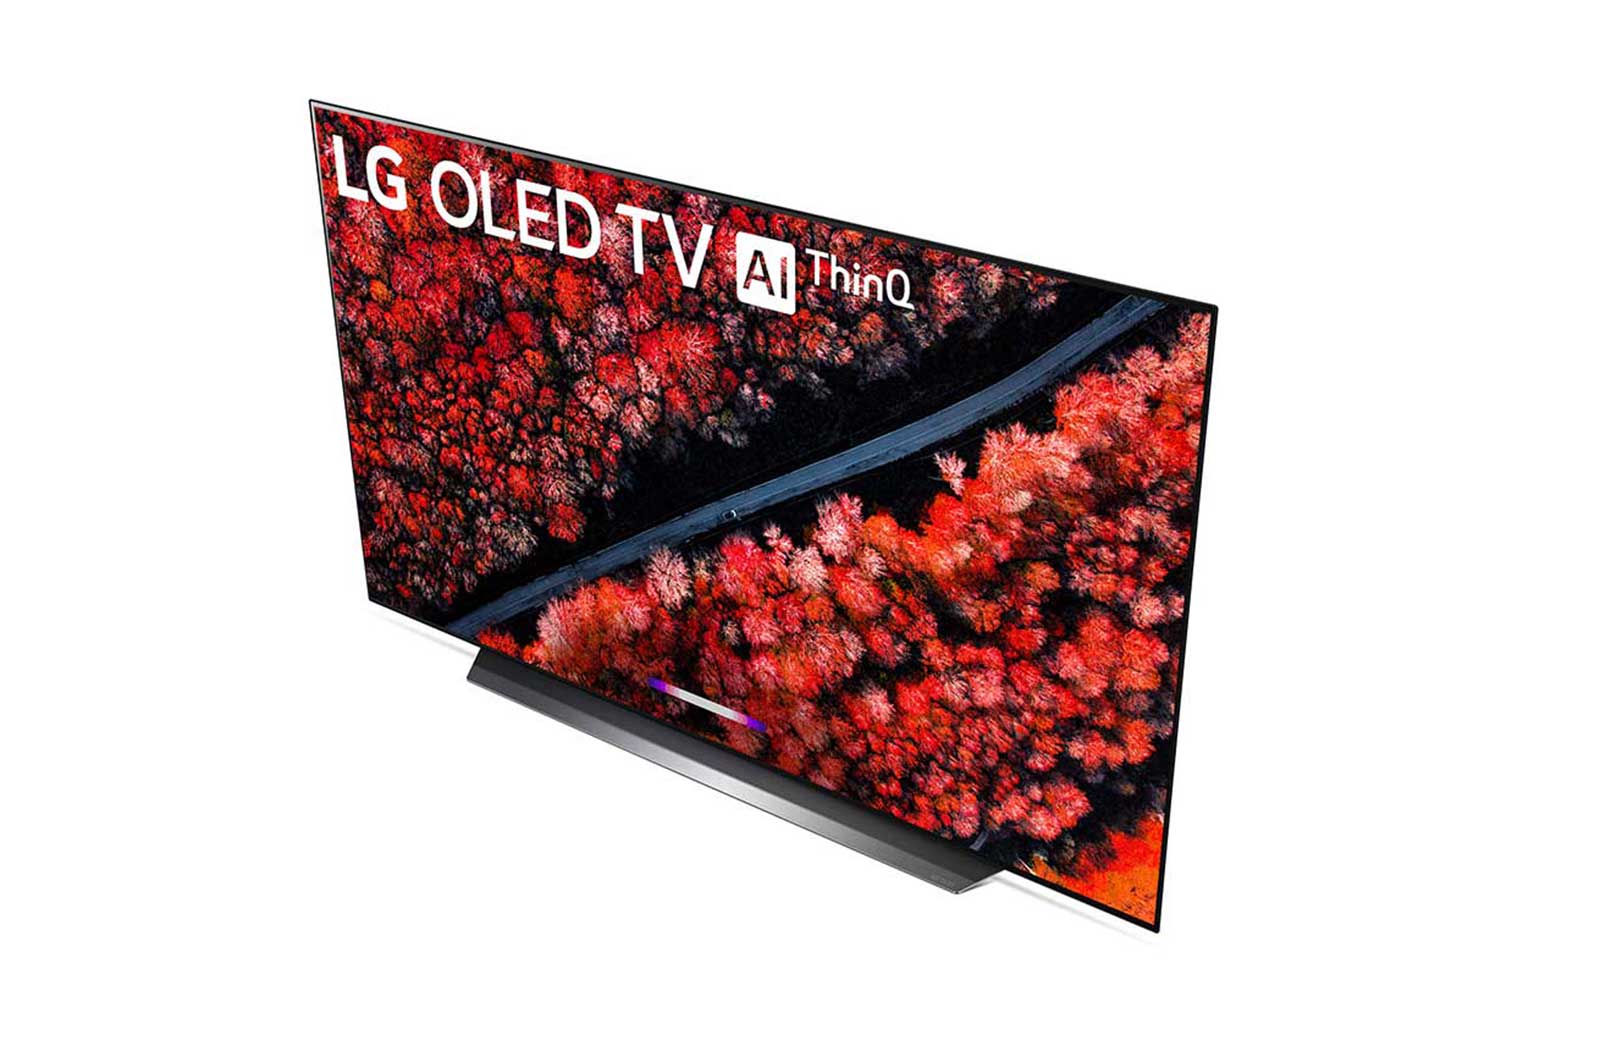 Lg C9 65 Inch Oled 4k Smart Tv Wai Thinq® Lg Usa